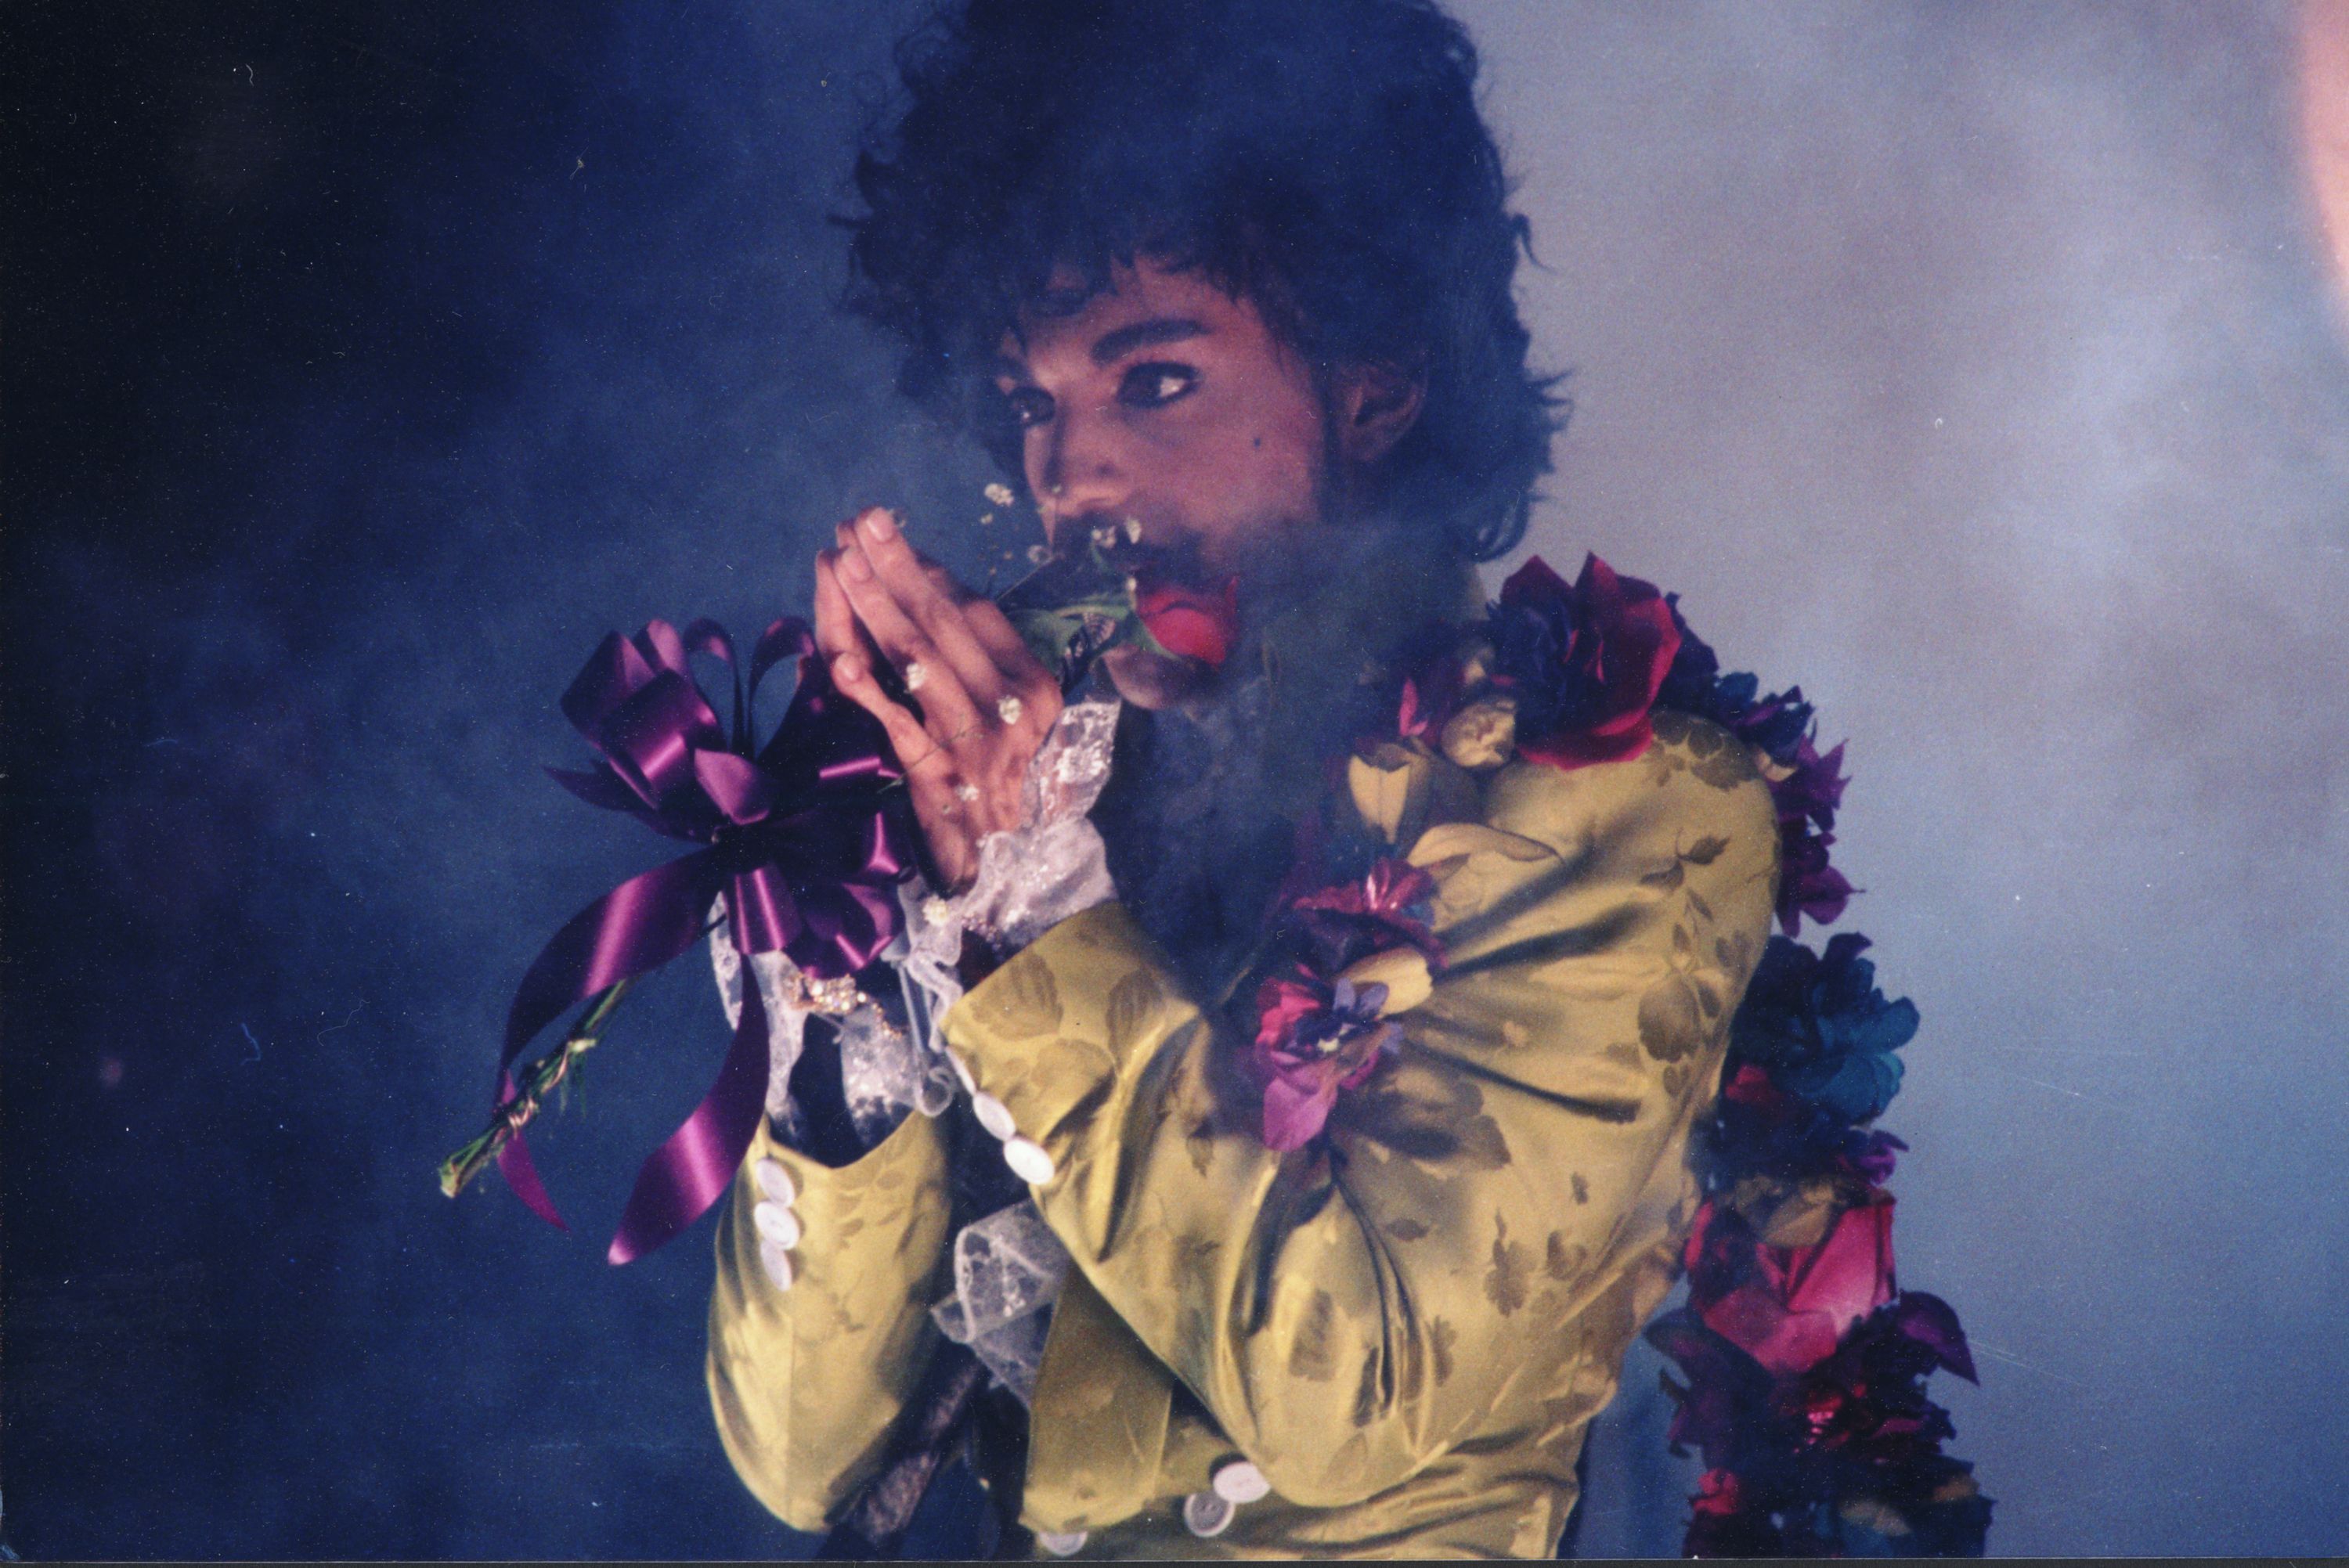 Best Prince Photo Photo of Prince's 'Purple Rain' Era